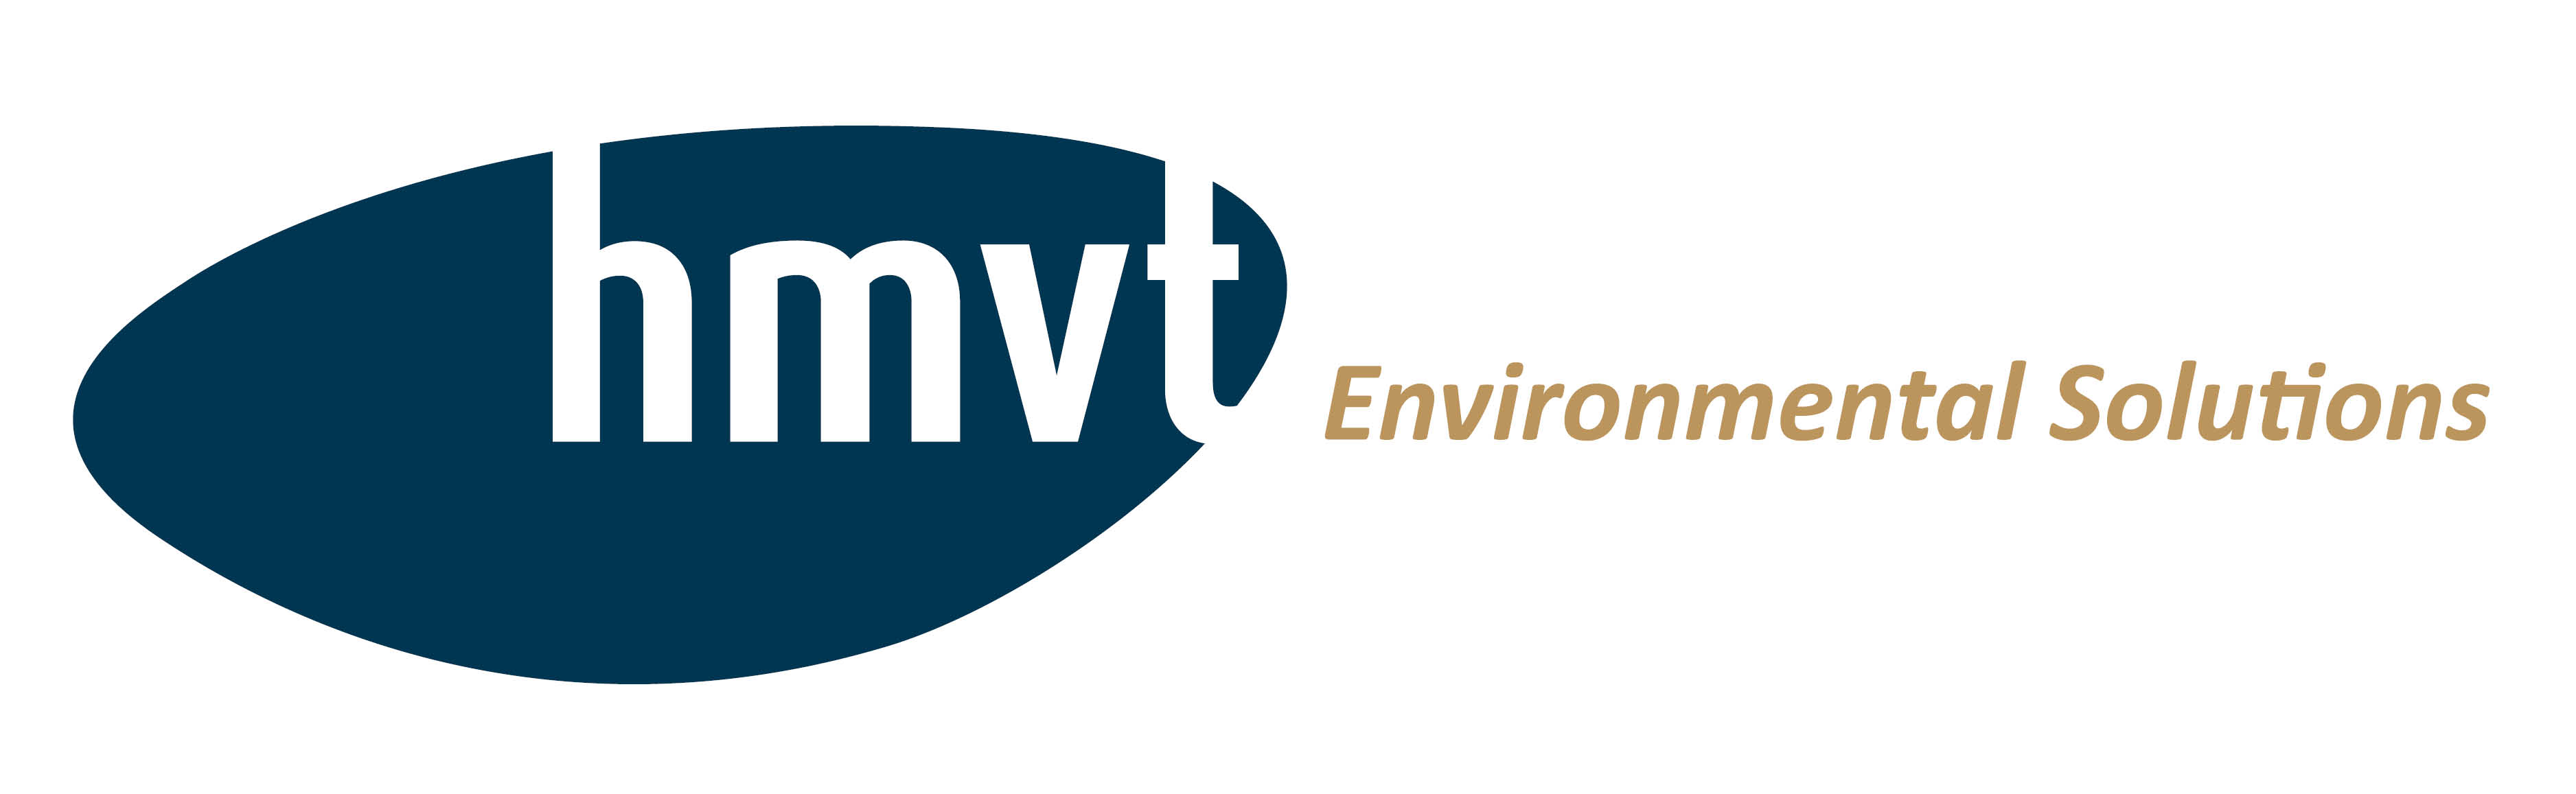 HMVT logo